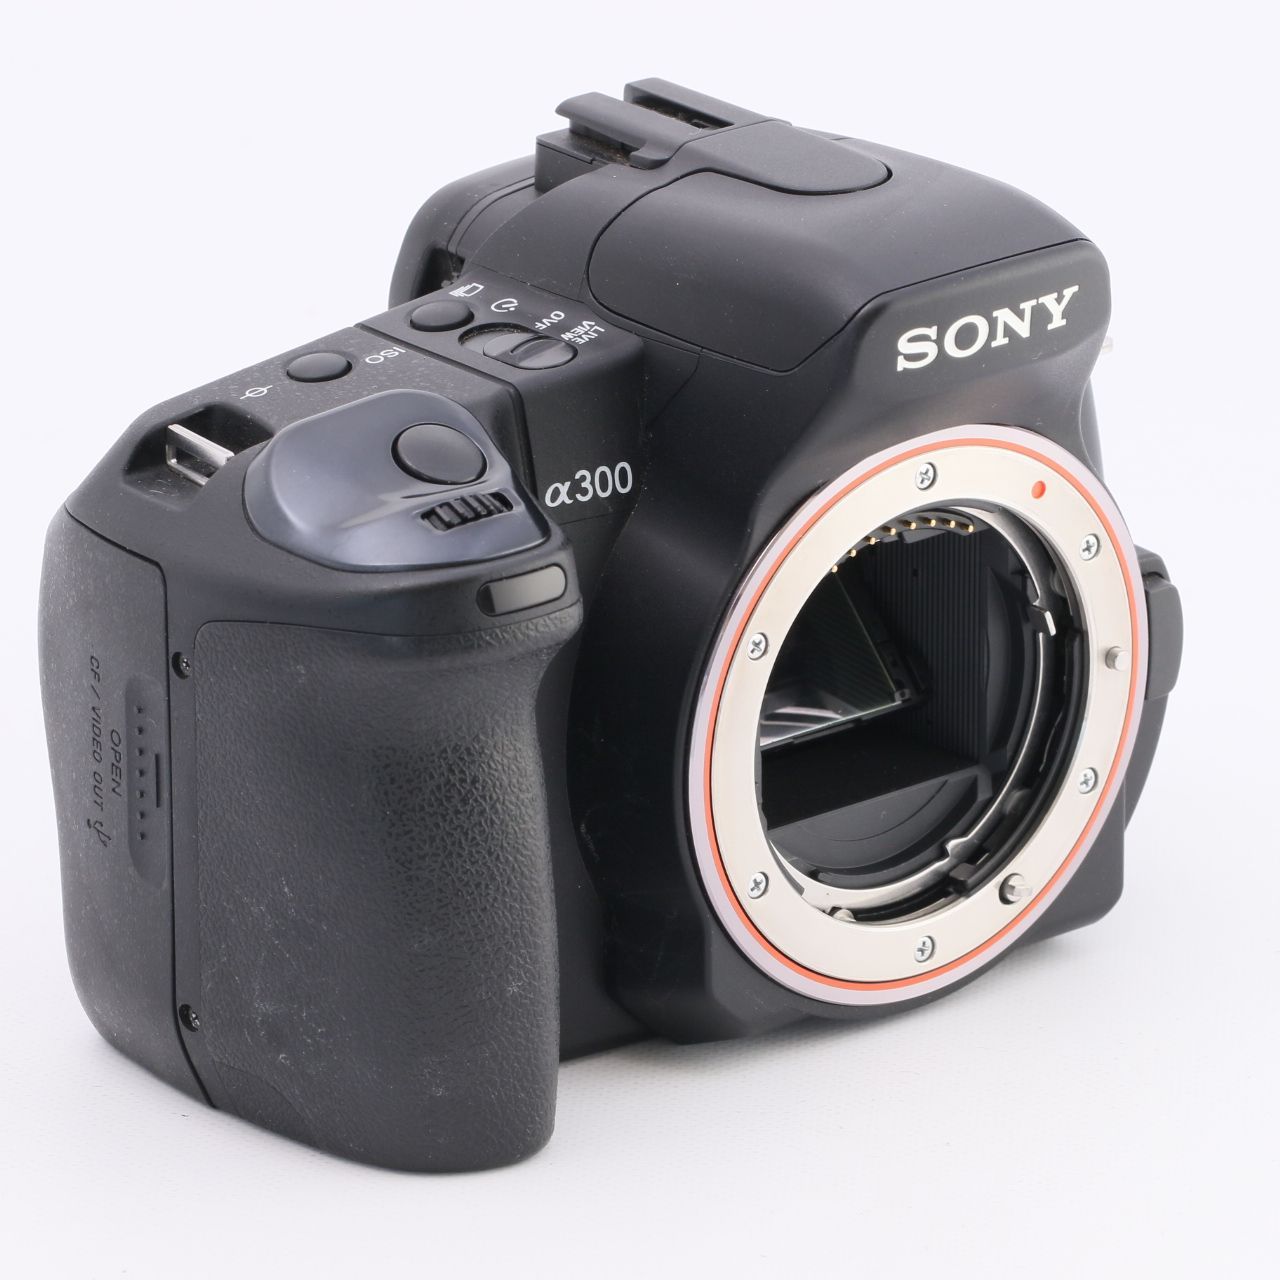 SONY デジタル一眼レフカメラ α300ボディ ブラック DSLRA300 カメラ本舗｜Camera honpo メルカリ